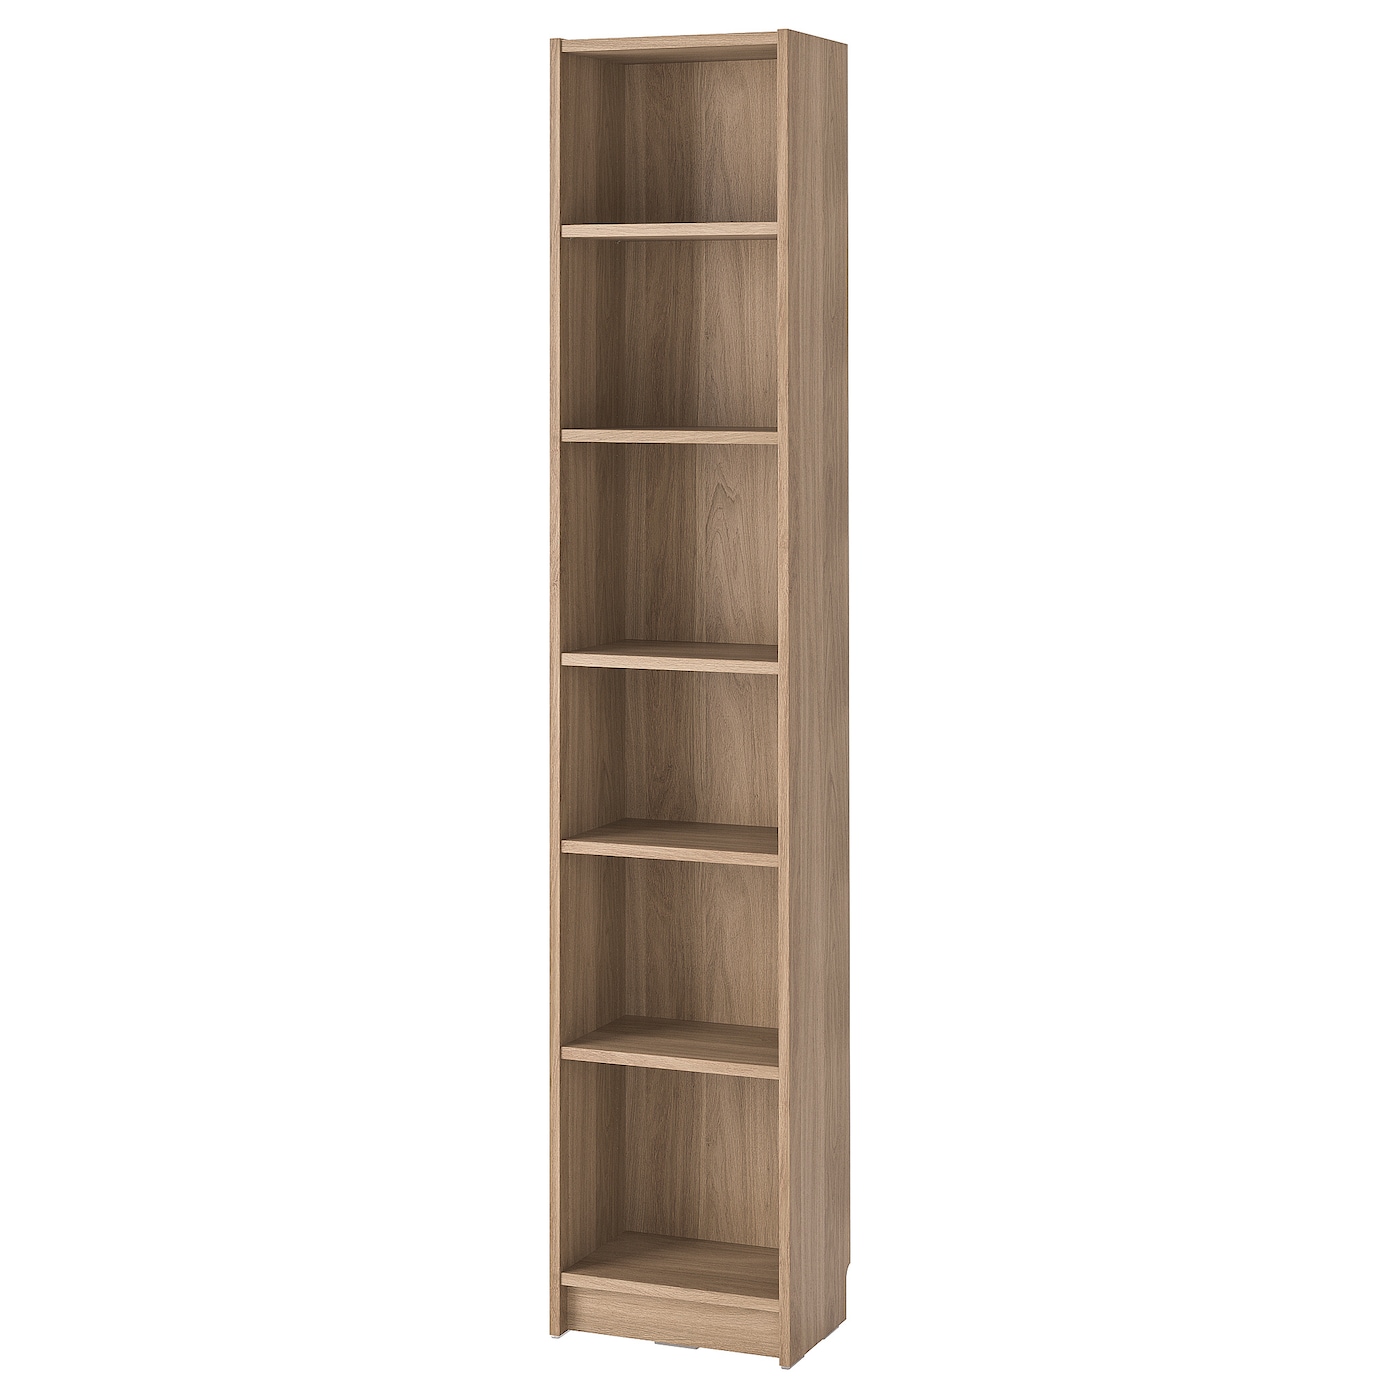 Книжный шкаф -  BILLY IKEA/ БИЛЛИ ИКЕА, 40х28х202 см, под беленый дуб